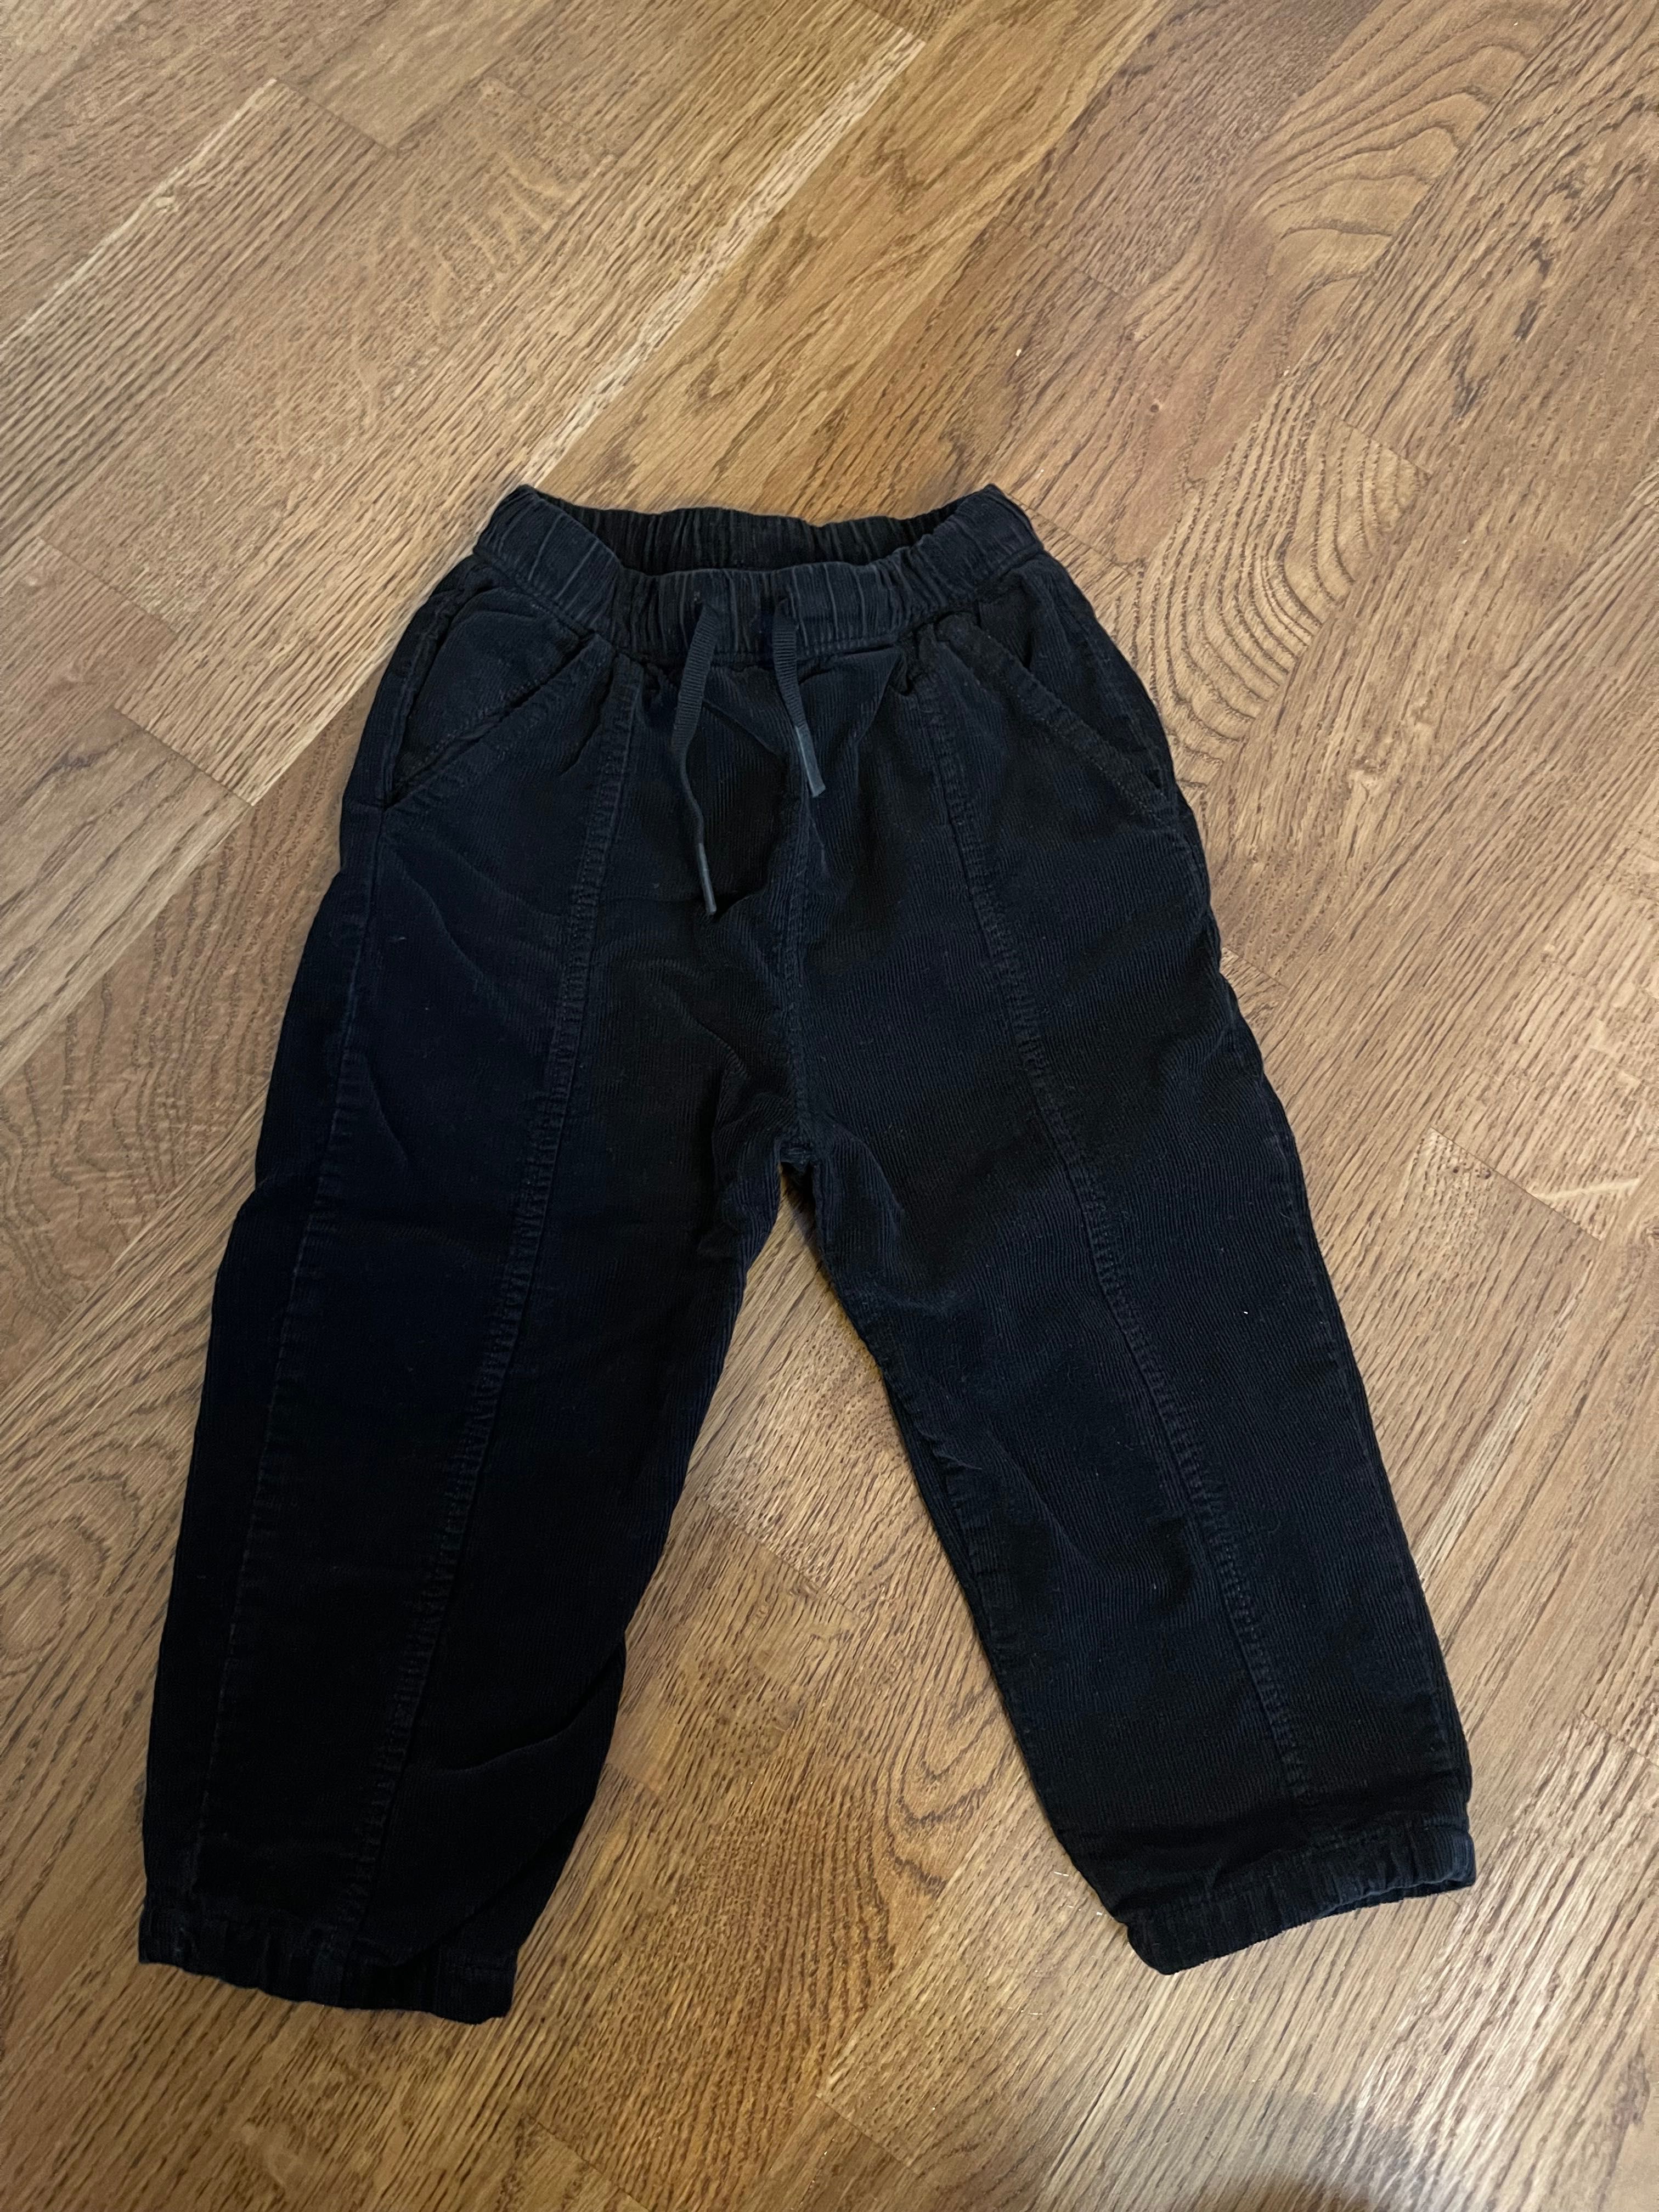 Pantaloni Zara, marimea 98